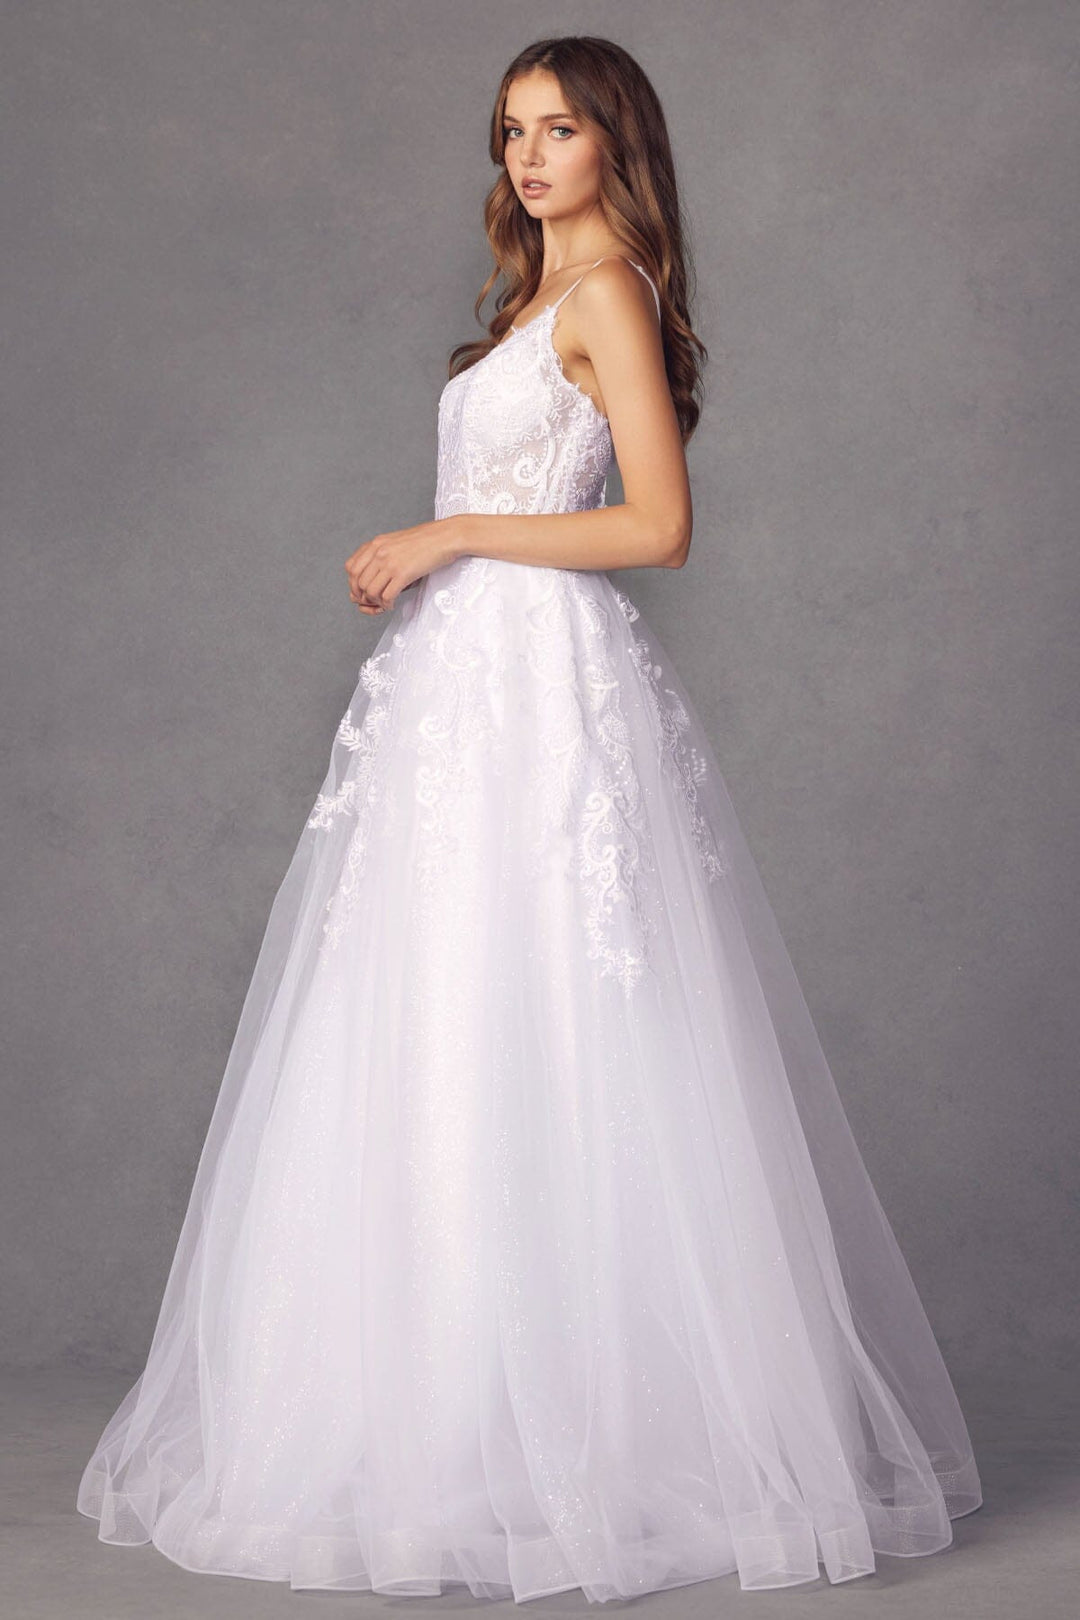 White Embellished Long Sleeveless Dress by Juliet 251W